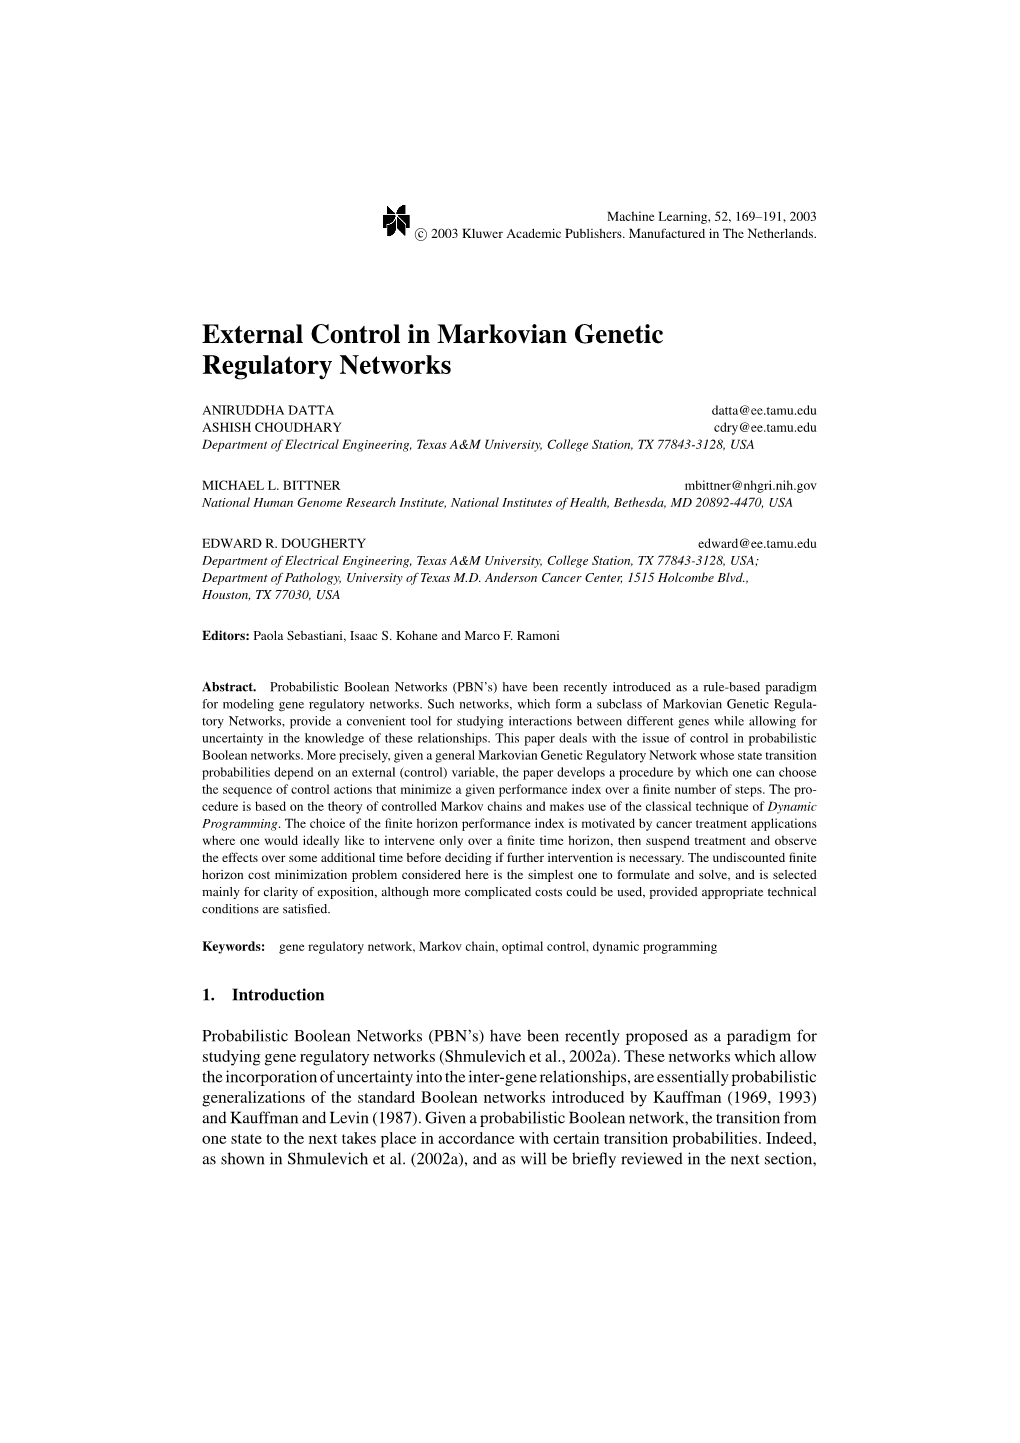 External Control in Markovian Genetic Regulatory Networks